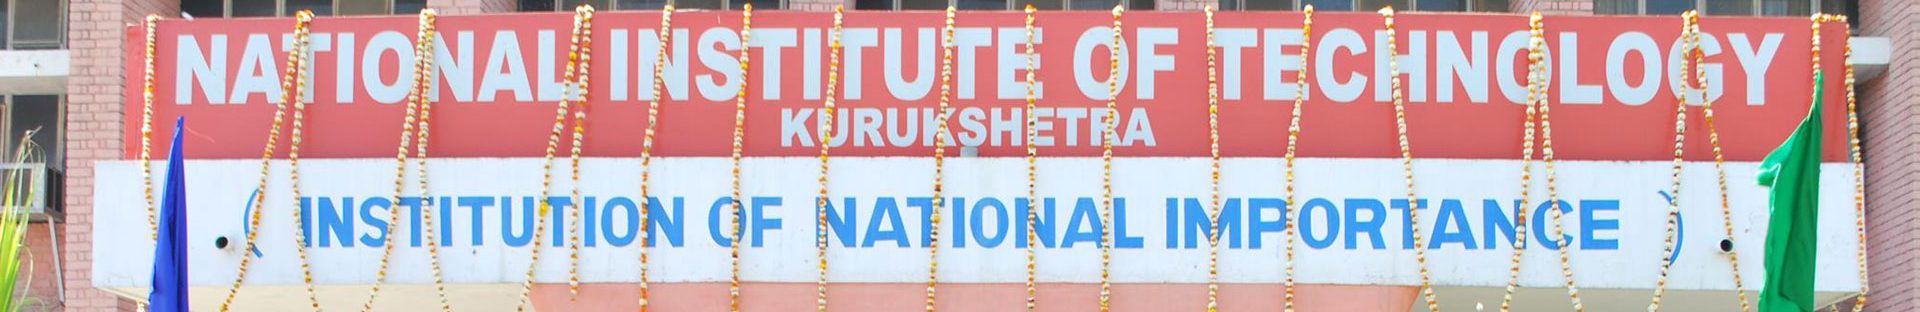 NIT Kurukshetra is going to organize workshops to empower India in Digital Skills